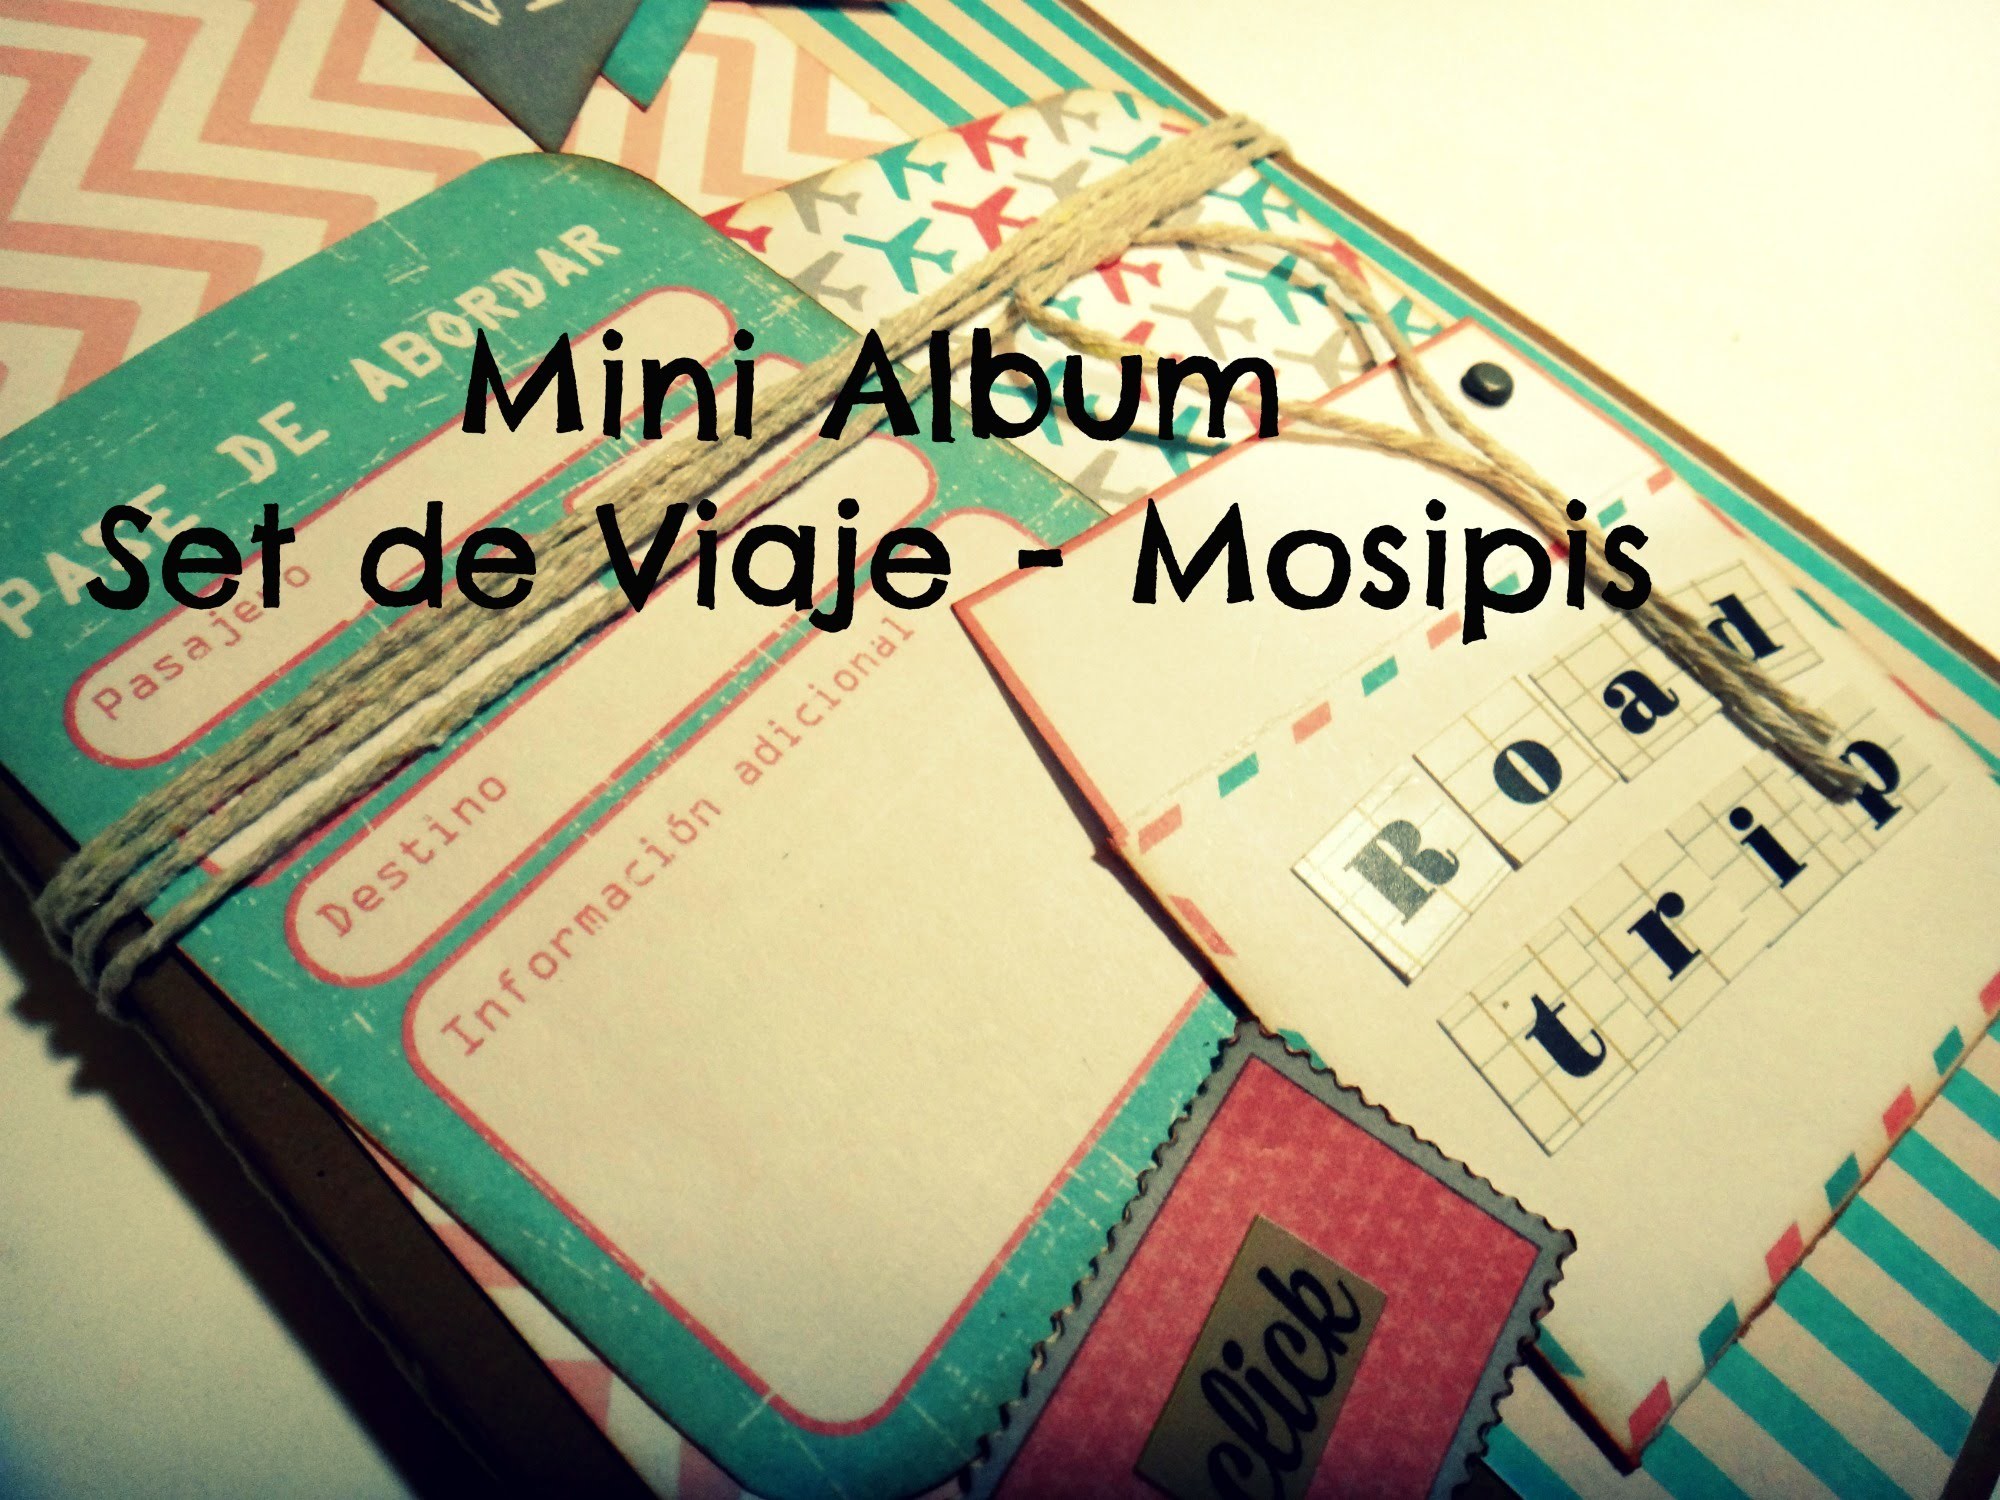 Mini Album - Set de Viaje Mosipis - Mini Album Scrapbook